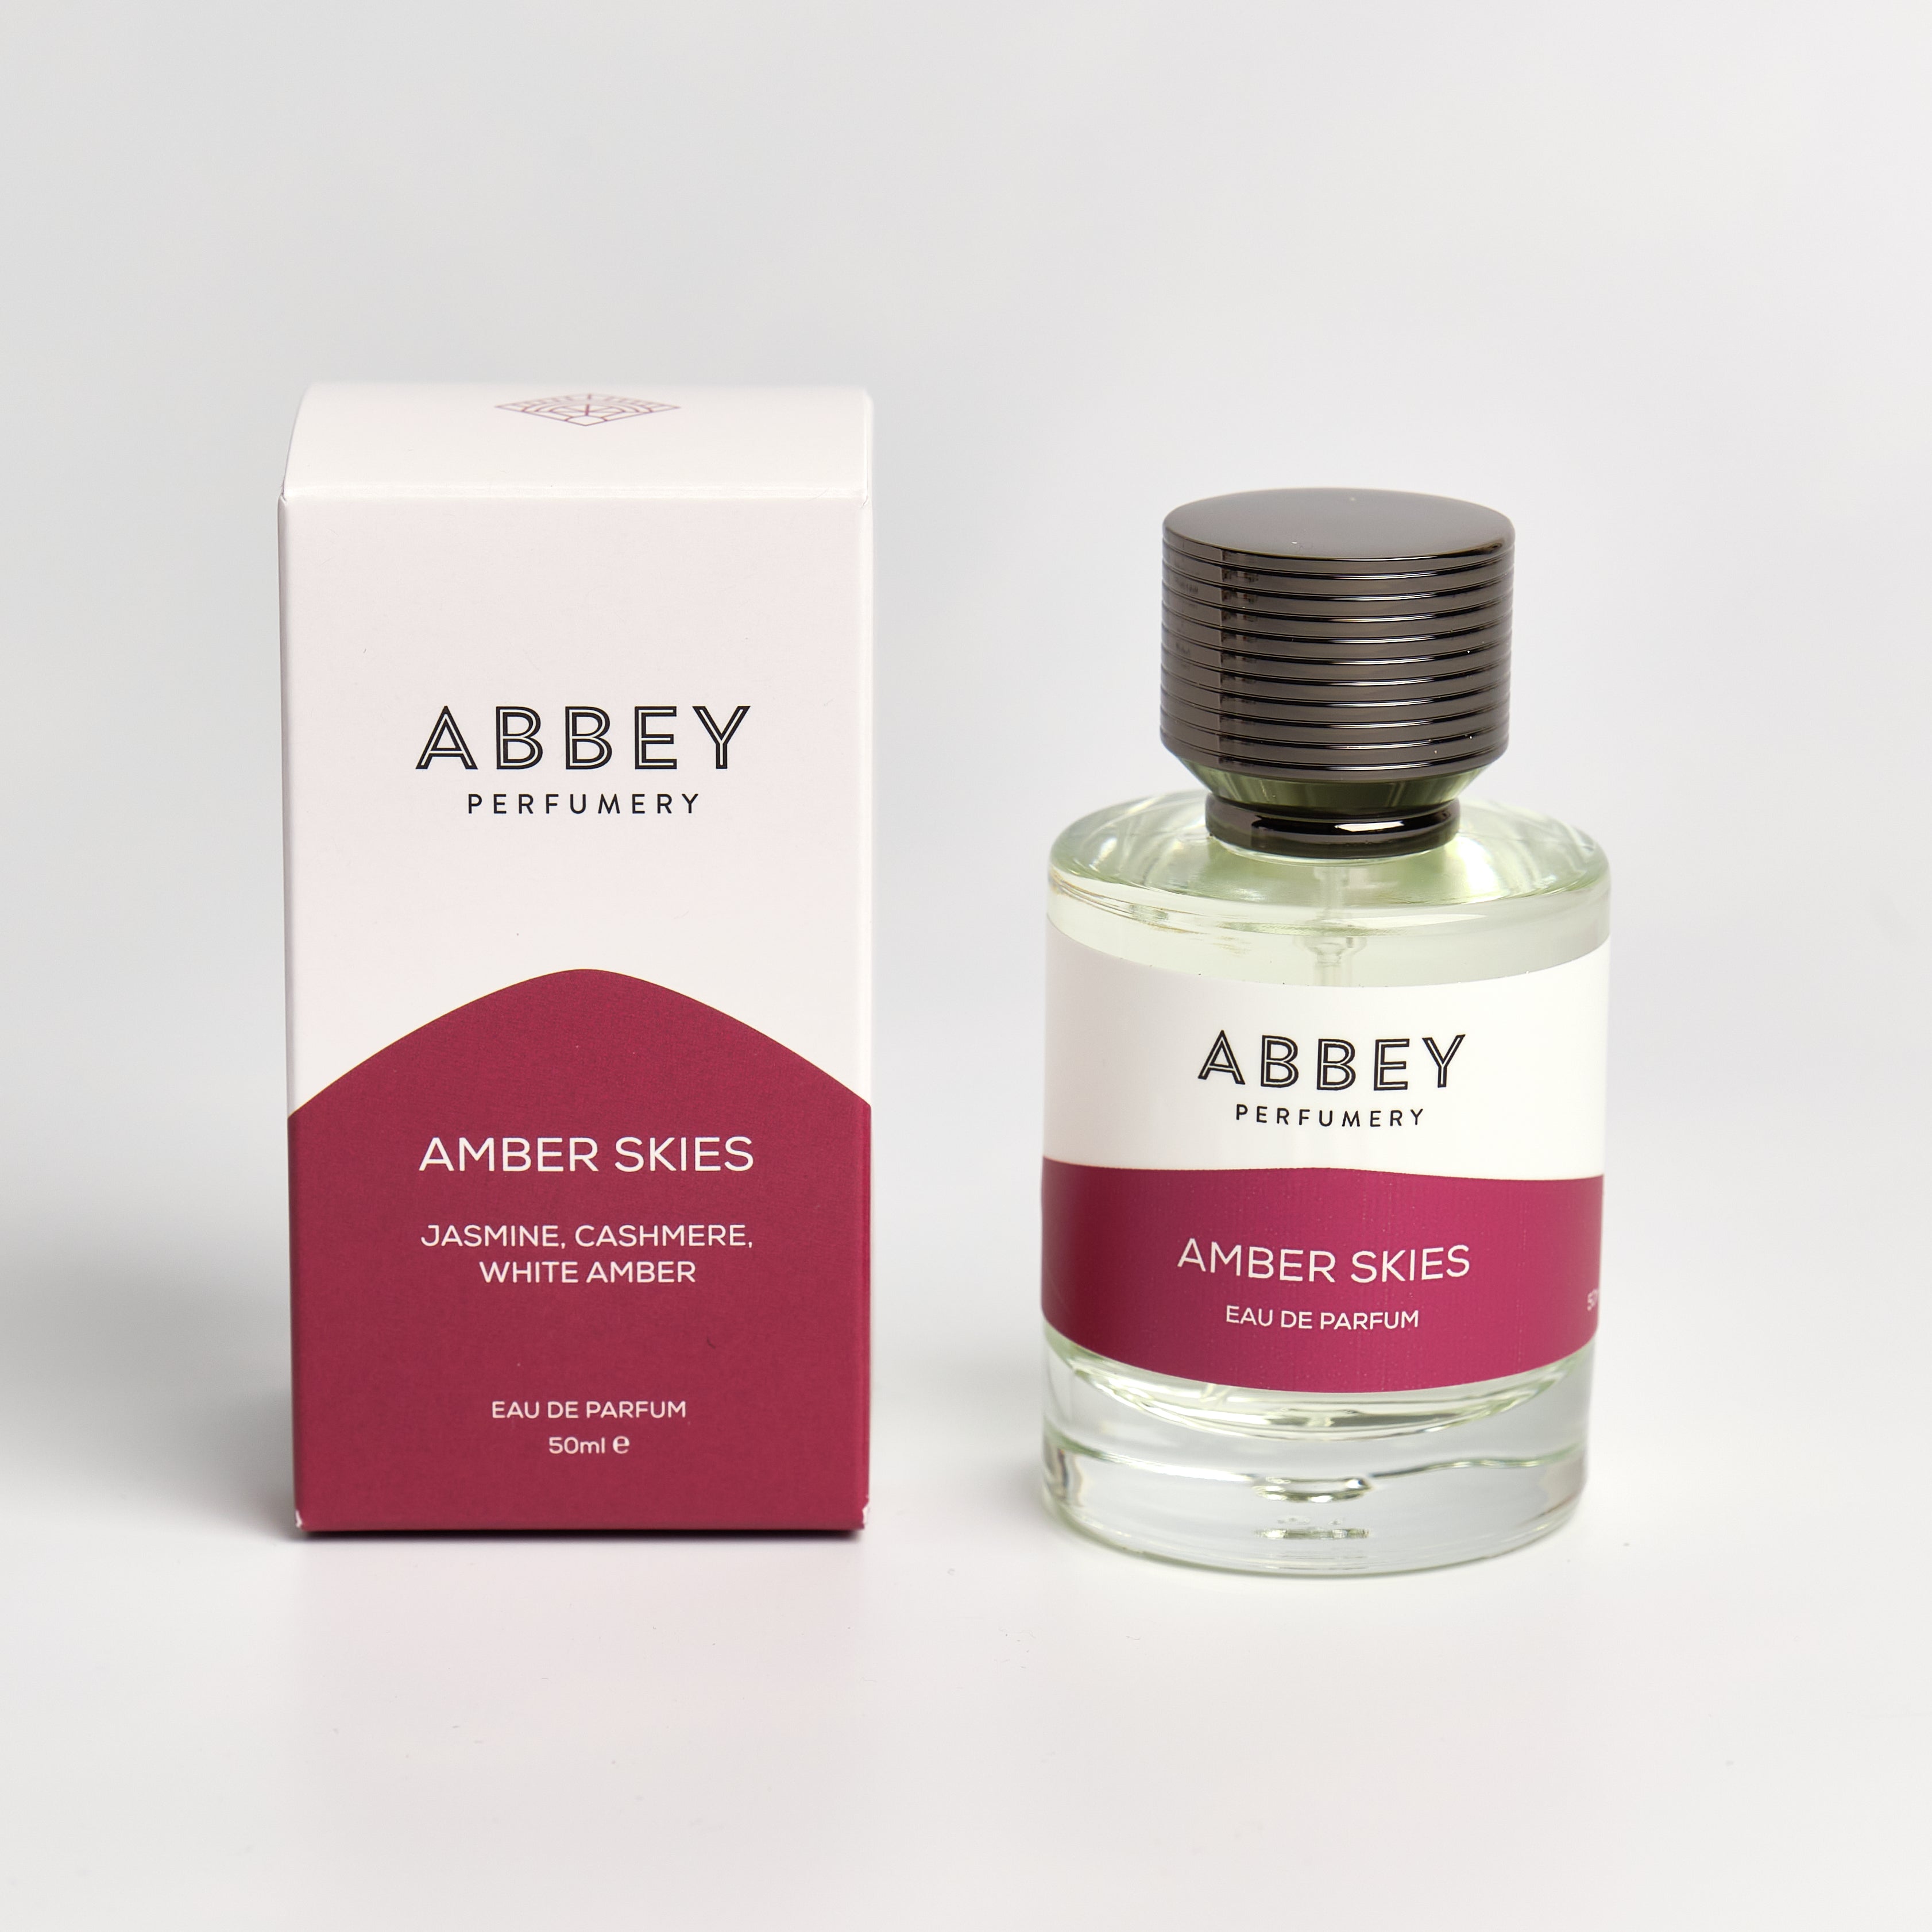 Amber Skies perfume bottle and box 50ml on white background